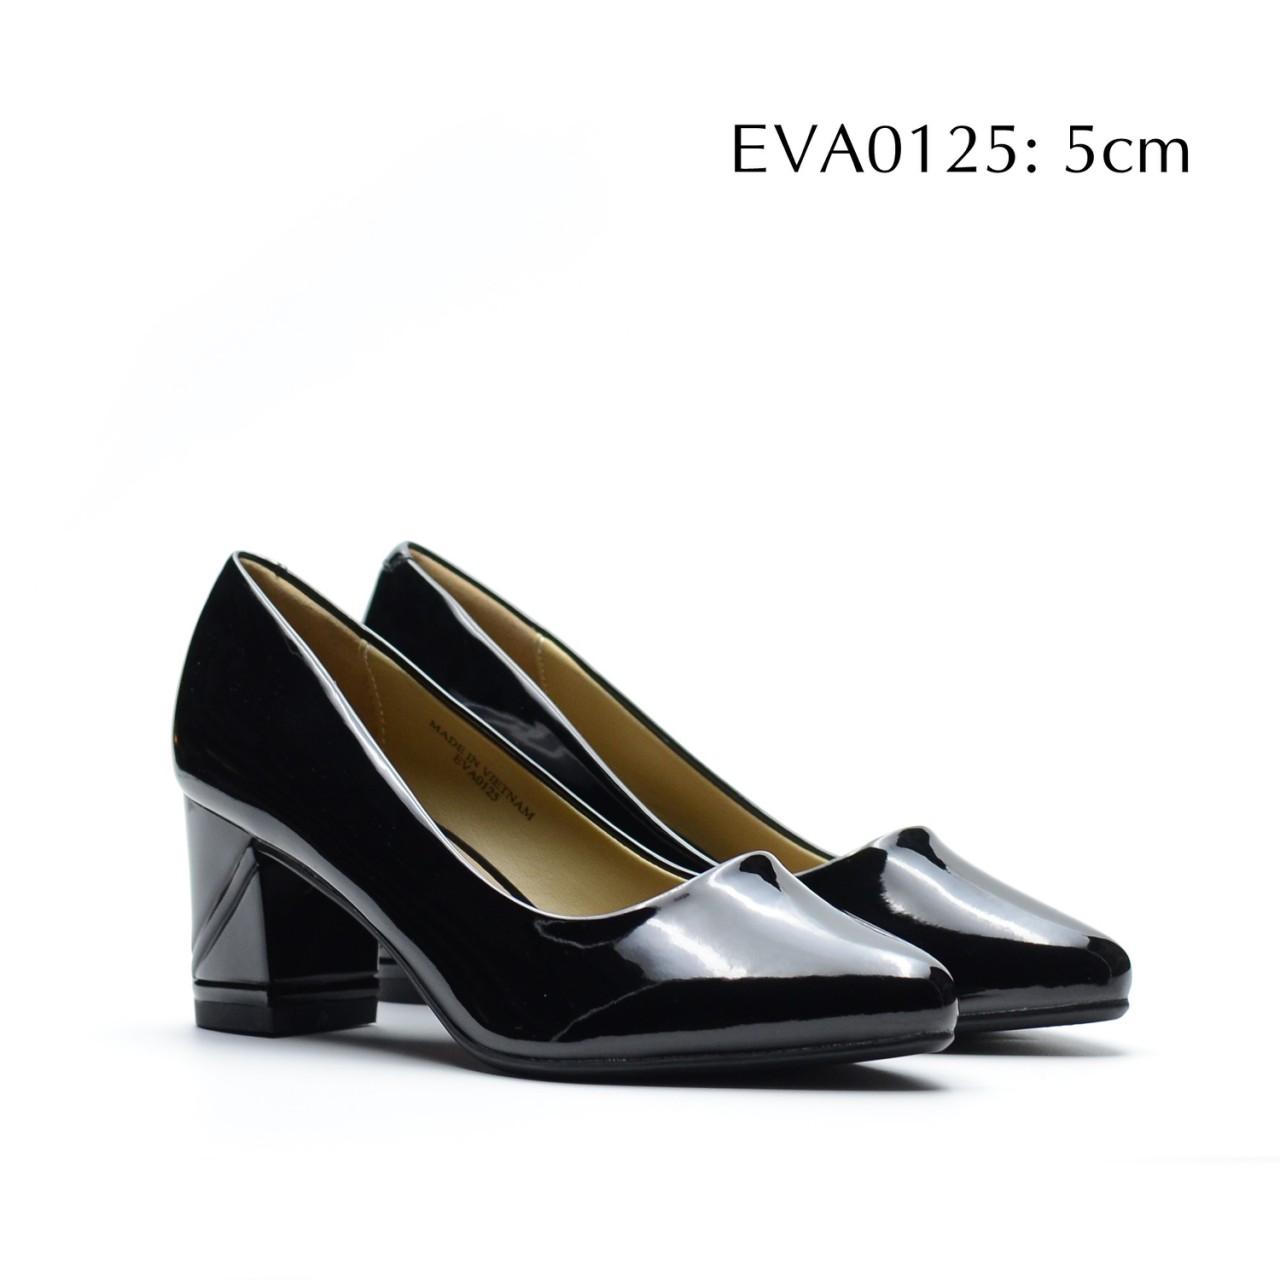 Giày đế vuông EVA0125 da bóng cao 5cm